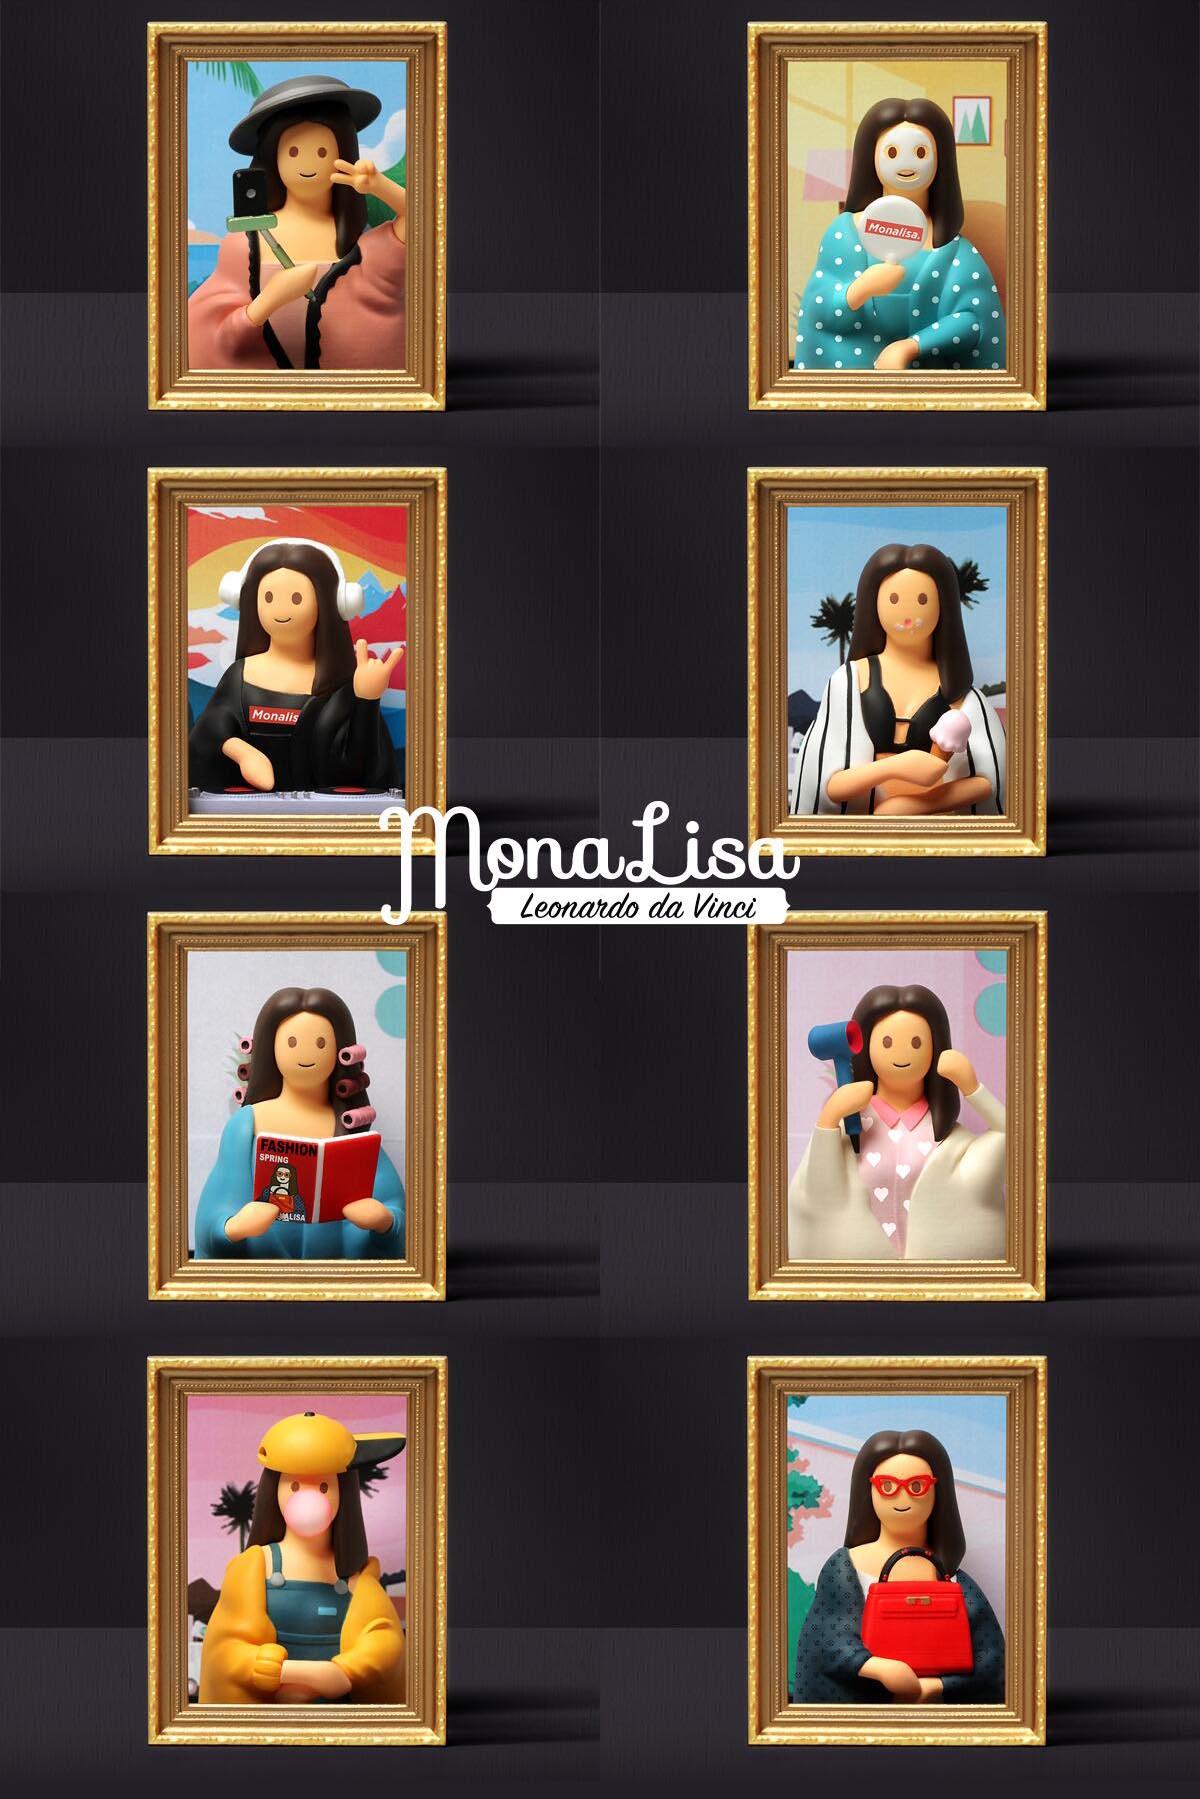 Mona Lisa Mini Figures by STRAVELING MUZEUM